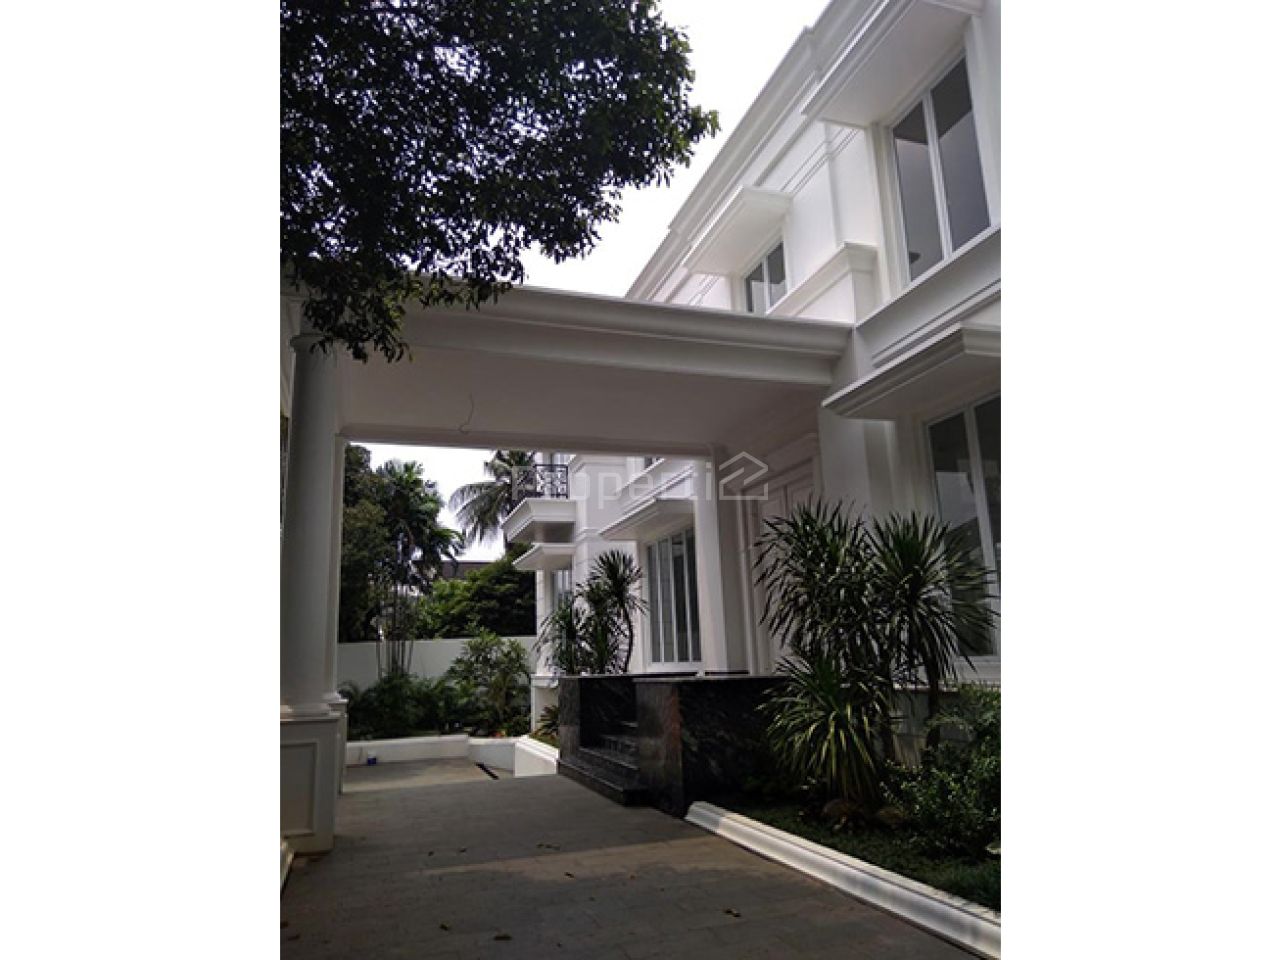 New Super Luxury House with Hook Position in Pondok Indah, DKI Jakarta